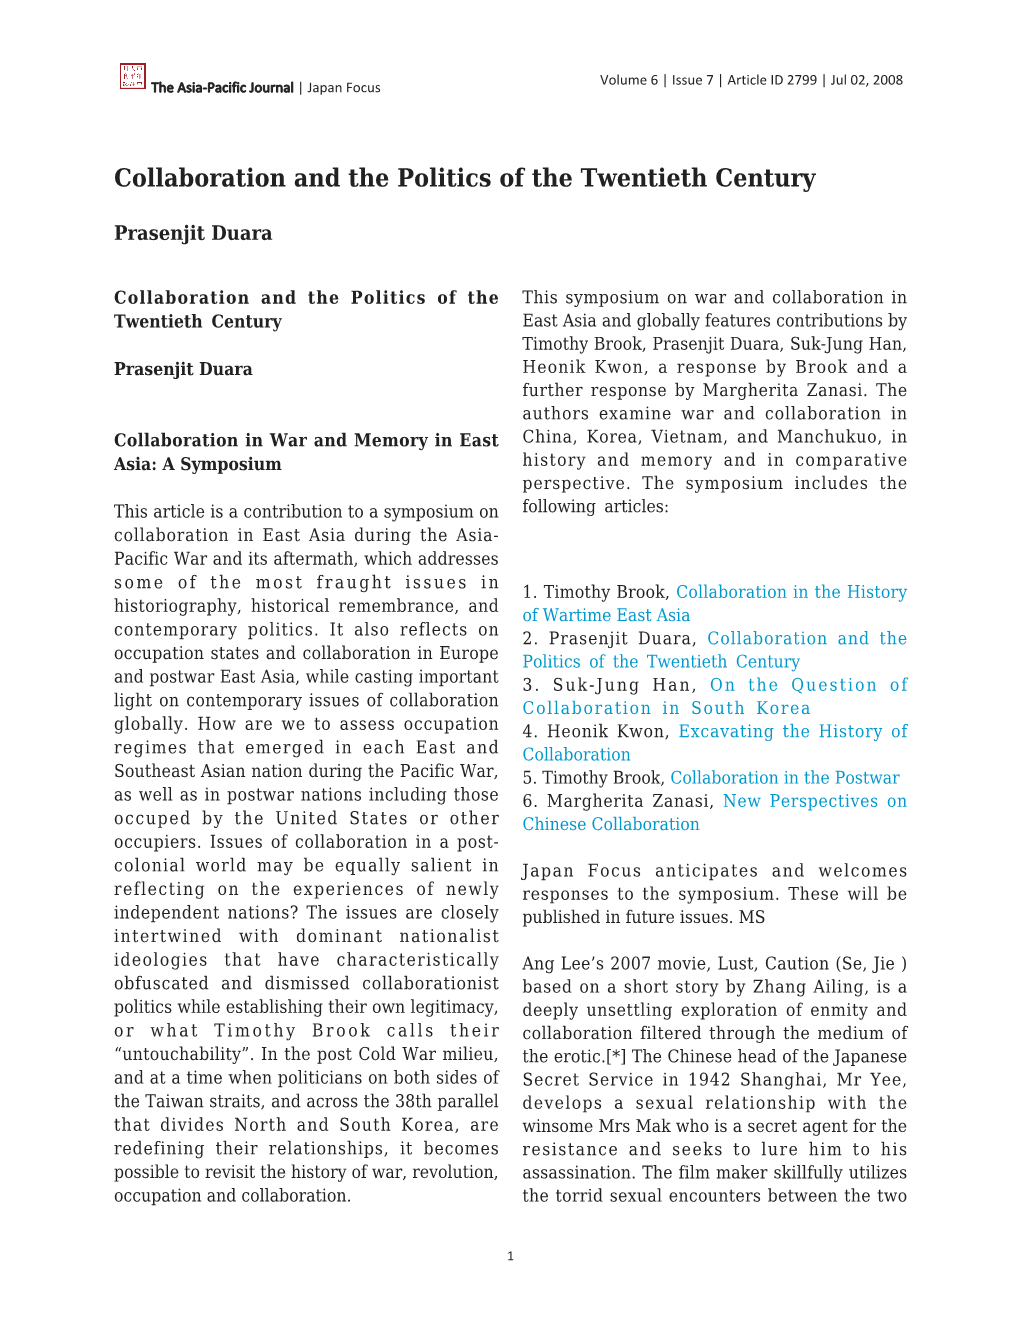 Collaboration and the Politics of the Twentieth Century